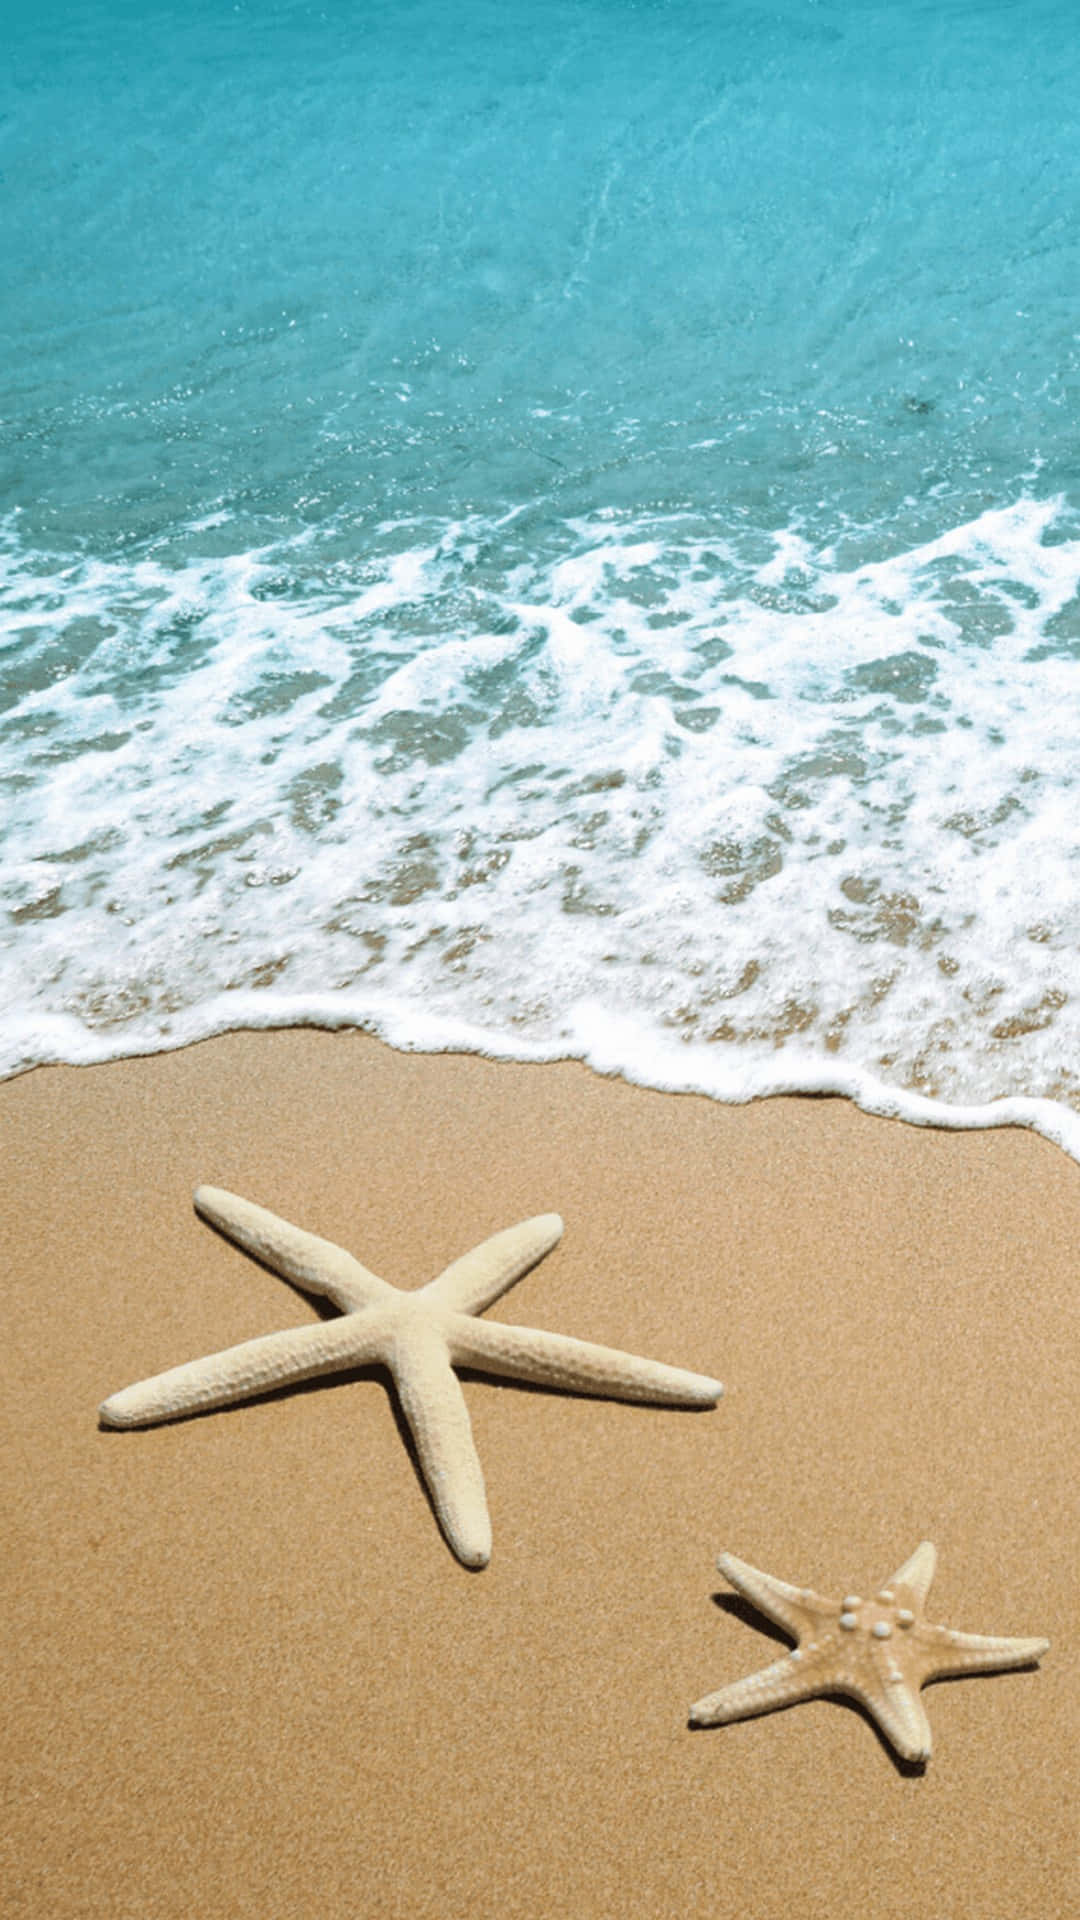 Aesthetic Summer Picture Sand Seashore